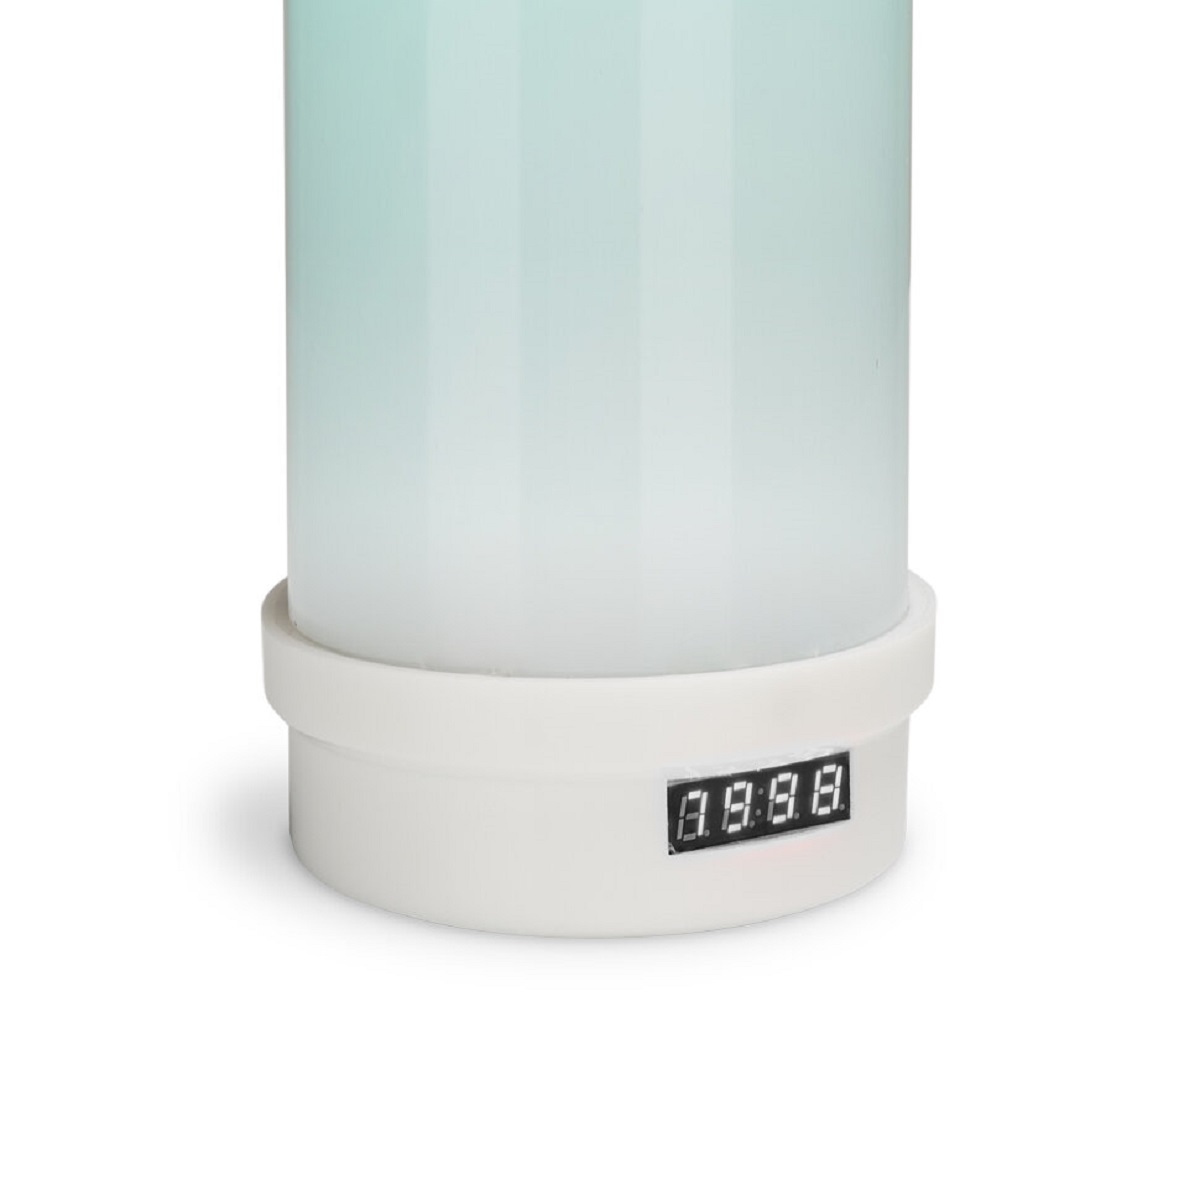 Бактерицидная лампа рециркулятор армед. Рециркулятор Армед 1-115. Рециркулятор бактерицидный Армед 111-115. Облучатель Армед сн111-115. Облучатель СН 111-130 Армед лампа.